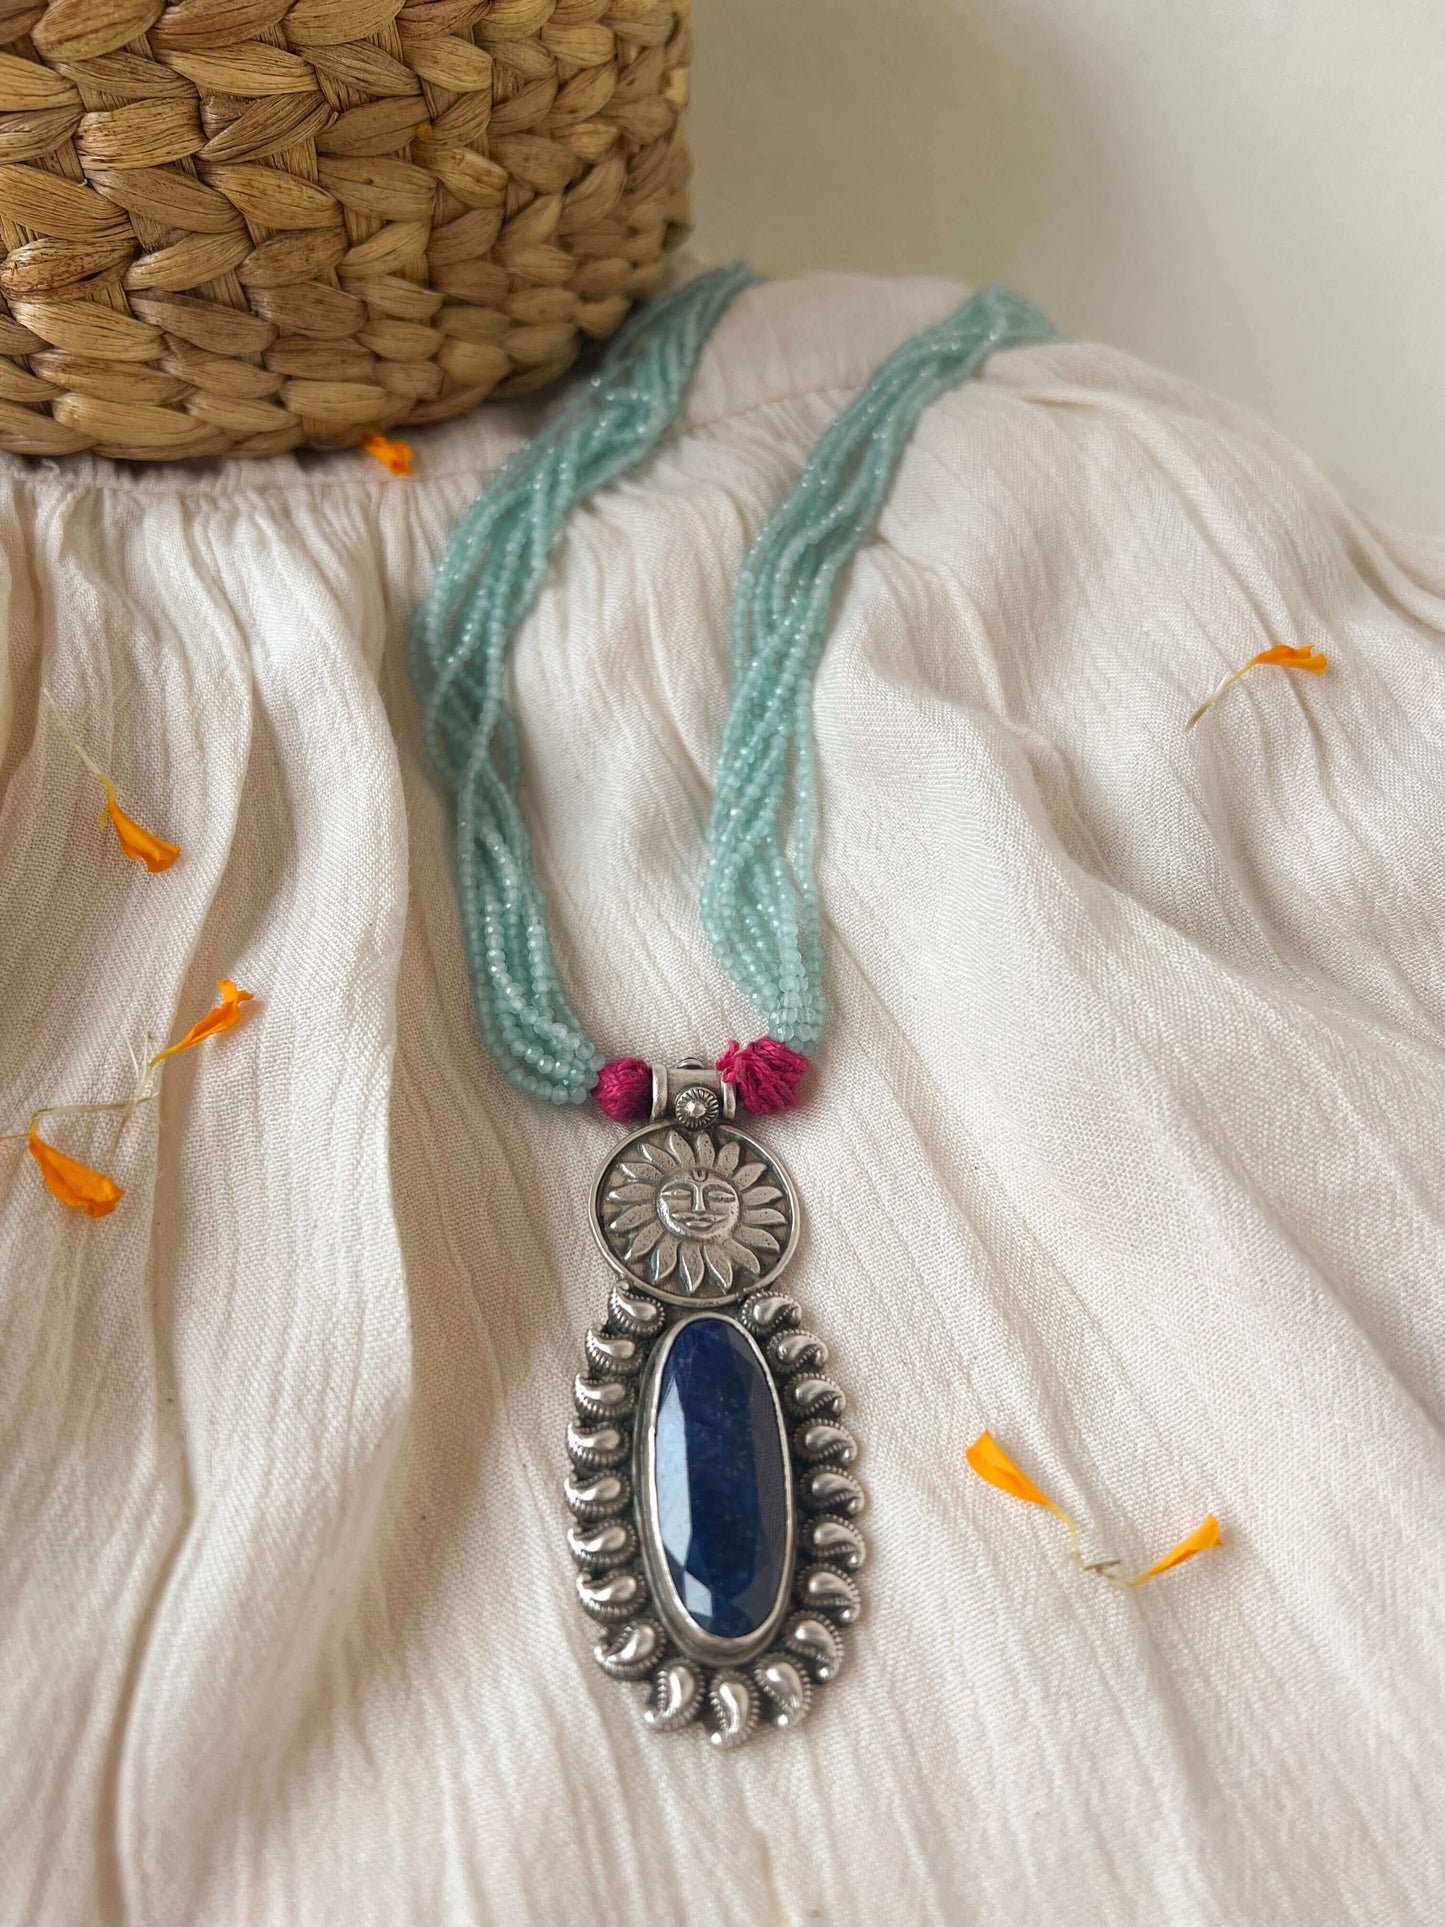 Shakti oxidised silver pendant with blue lapis lazuli